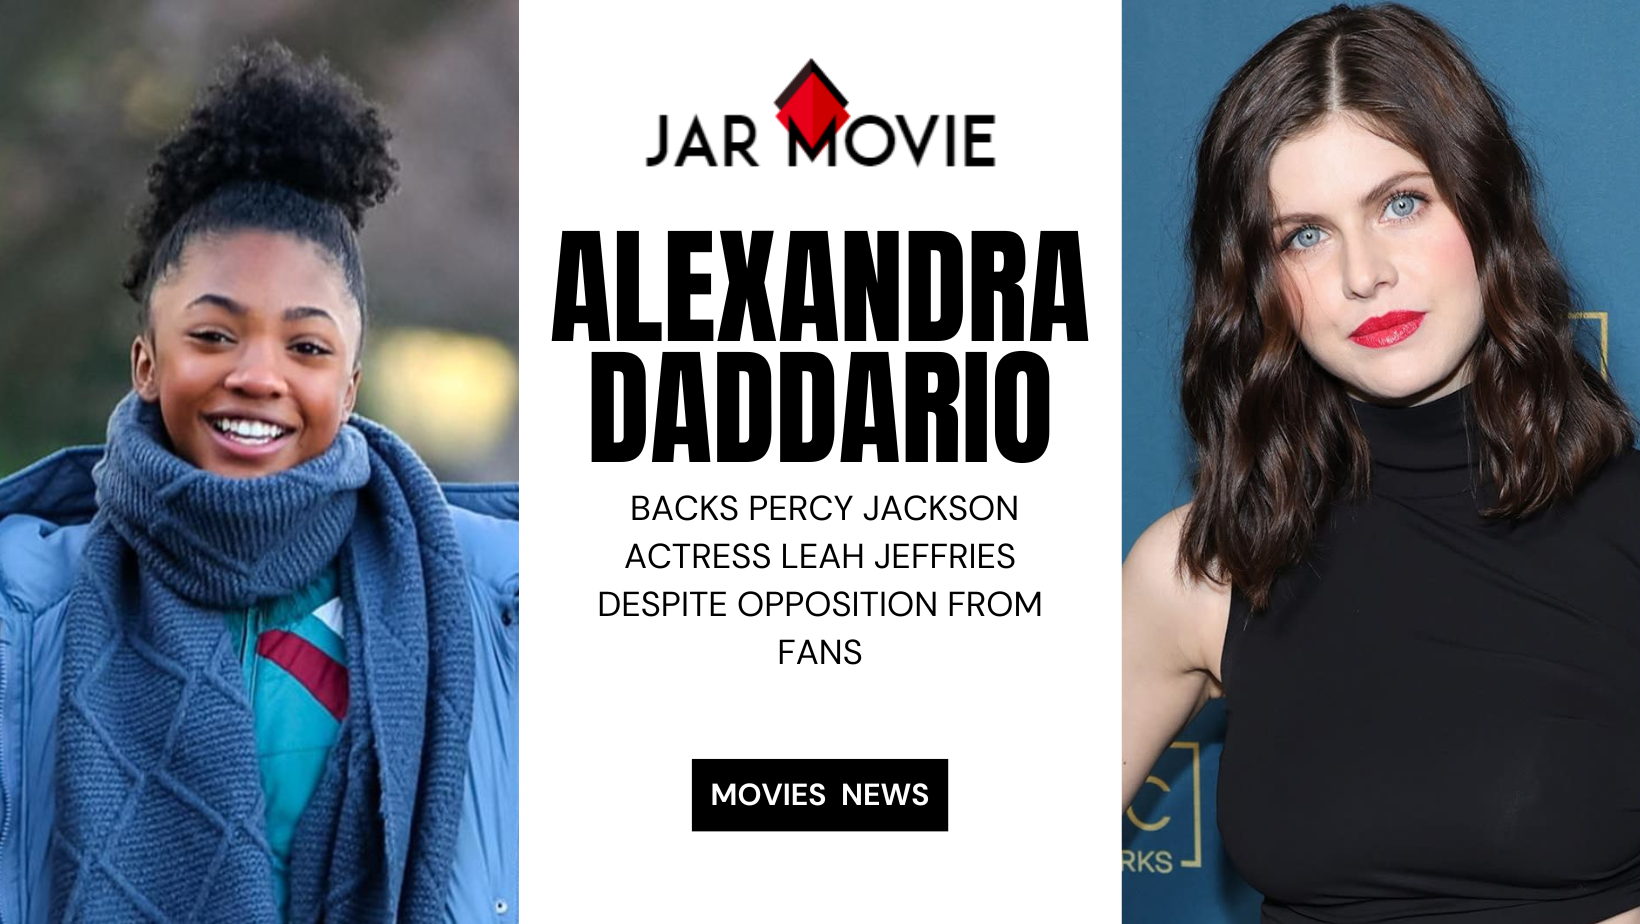 Alexandra Daddario Backs Percy Jackson Actress Leah Jeffries Despite Opposition from Fans